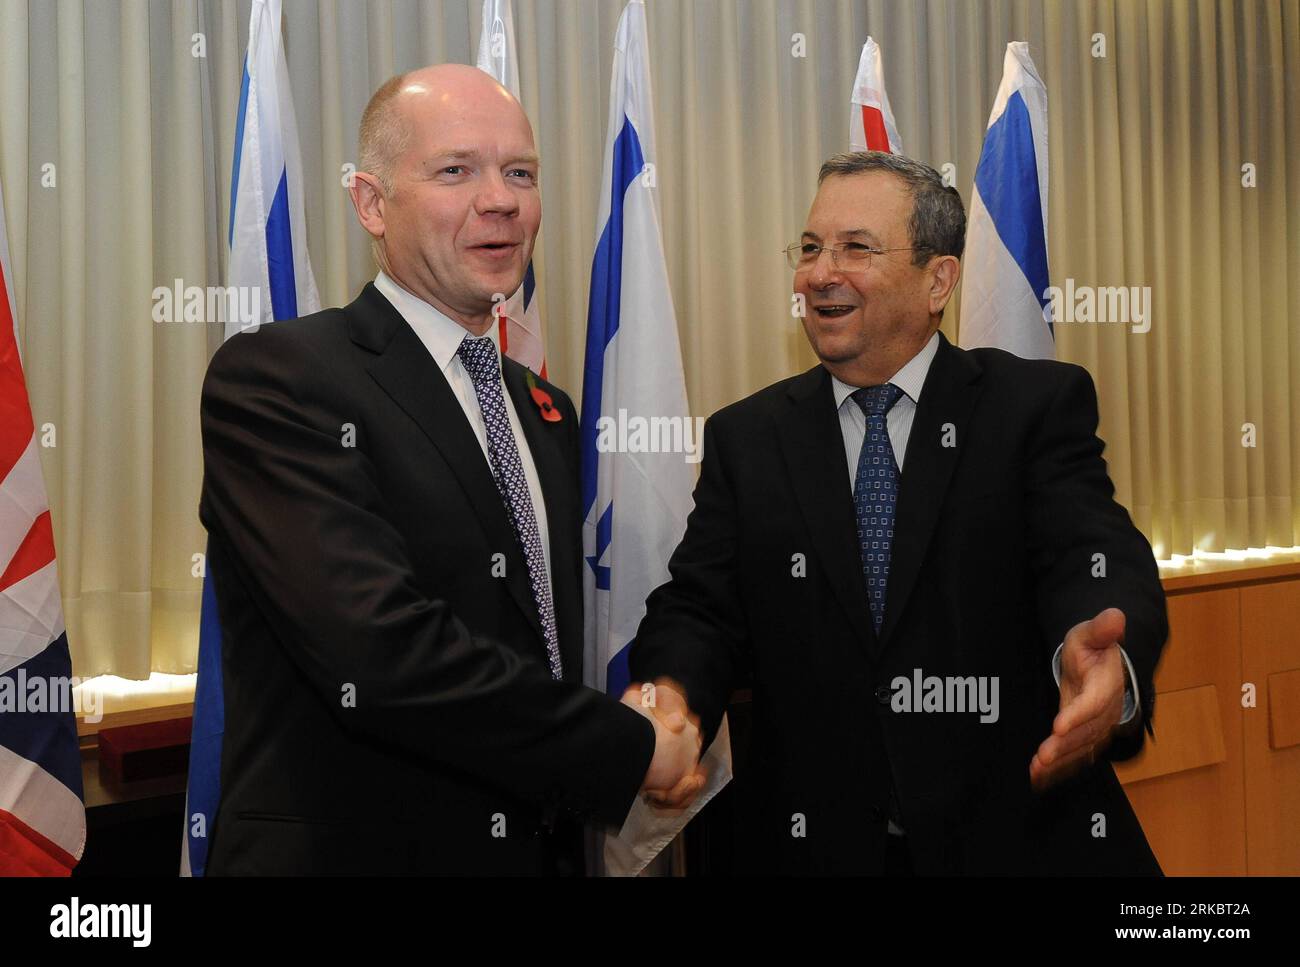 Bildnummer: 54606565  Datum: 04.11.2010  Copyright: imago/Xinhua (101104) -- TEL AVIV, Nov.4, 2010 (Xinhua) -- Israeli Defense Minister Ehud Barak (R) meets with British Foreign Secretary William Hague in Tel Aviv, Israel, on Nov. 4, 2010.(Xinhua/POOL/Ahikam Seri)(zl) ISRAEL-BRITAIN-MEETING PUBLICATIONxNOTxINxCHN People Politik kbdig xdp 2010 quer premiumd     Bildnummer 54606565 Date 04 11 2010 Copyright Imago XINHUA  Tel Aviv Nov 4 2010 XINHUA Israeli Defense Ministers Ehud Barak r Meets With British Foreign Secretary William Hague in Tel Aviv Israel ON Nov 4 2010 XINHUA Pool Ahikam Seri ZL Stock Photo